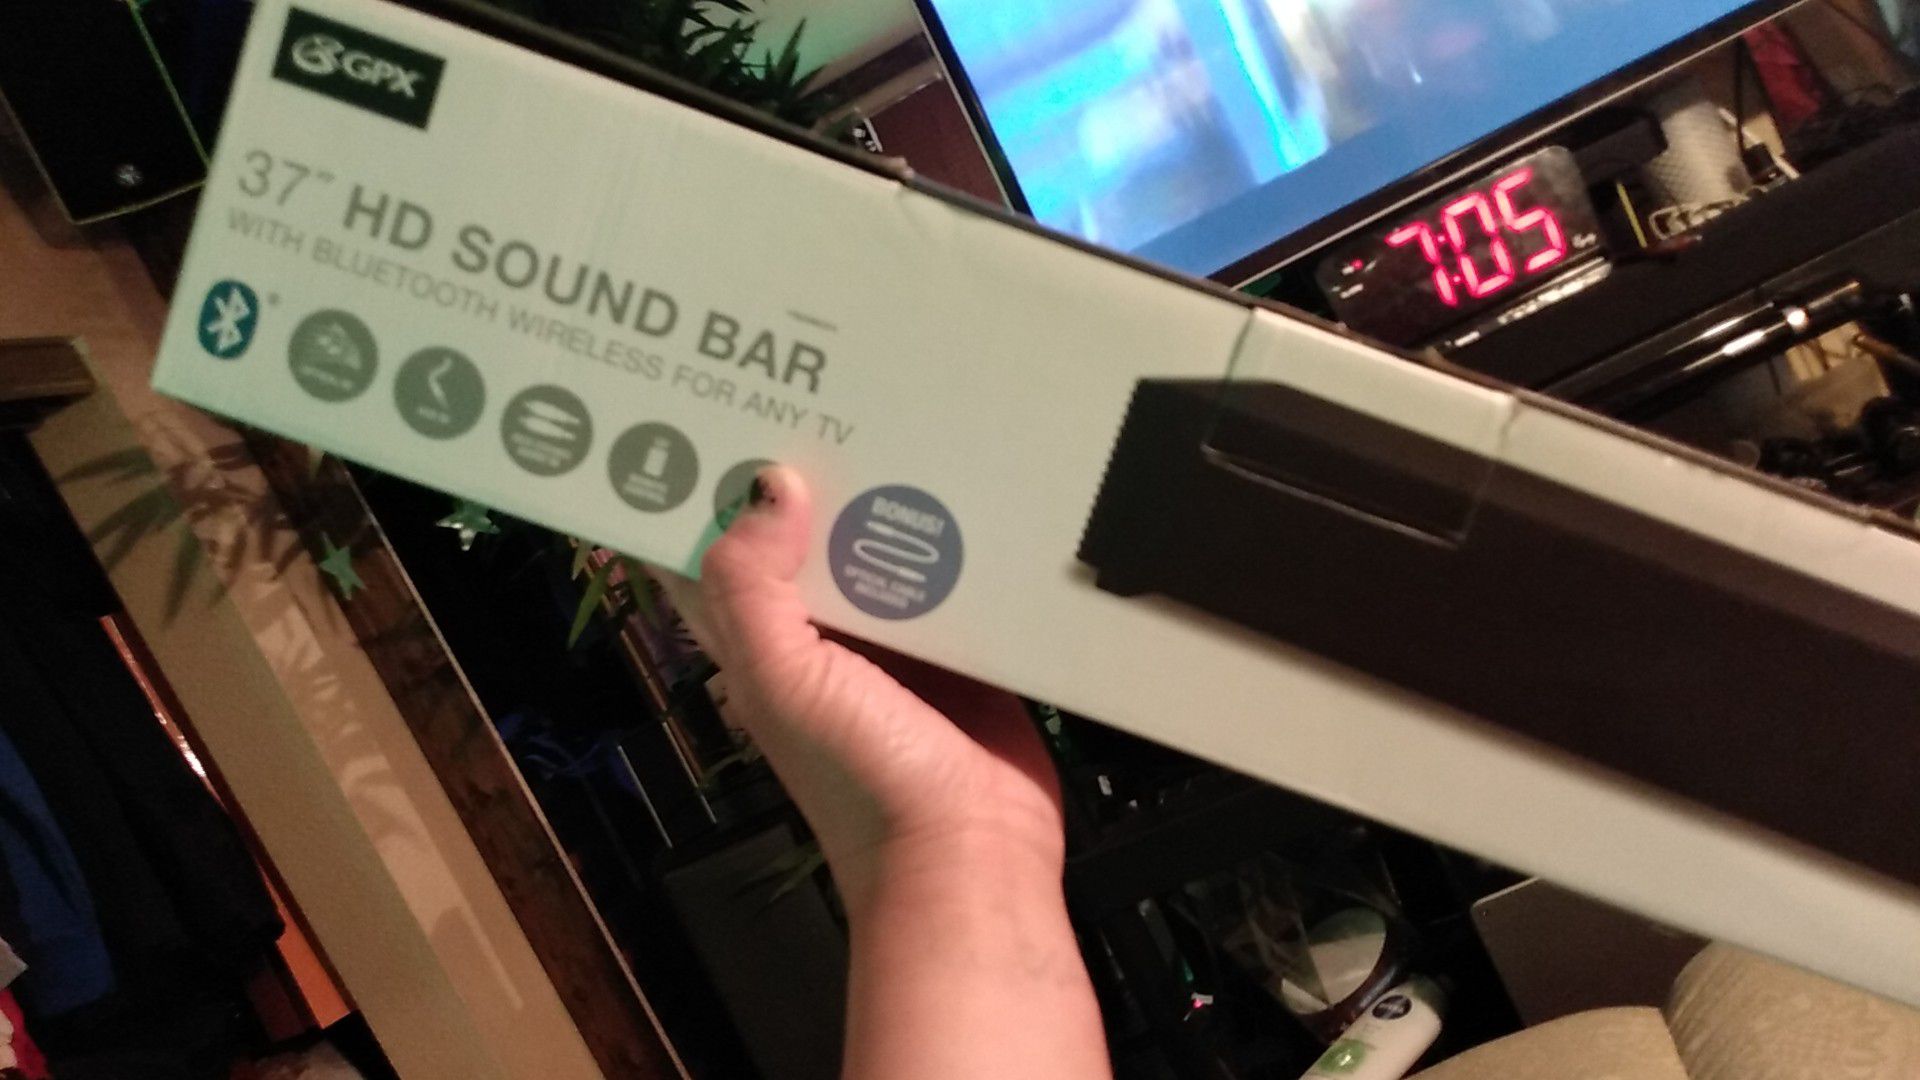 GPX 37"HD Sound Bar